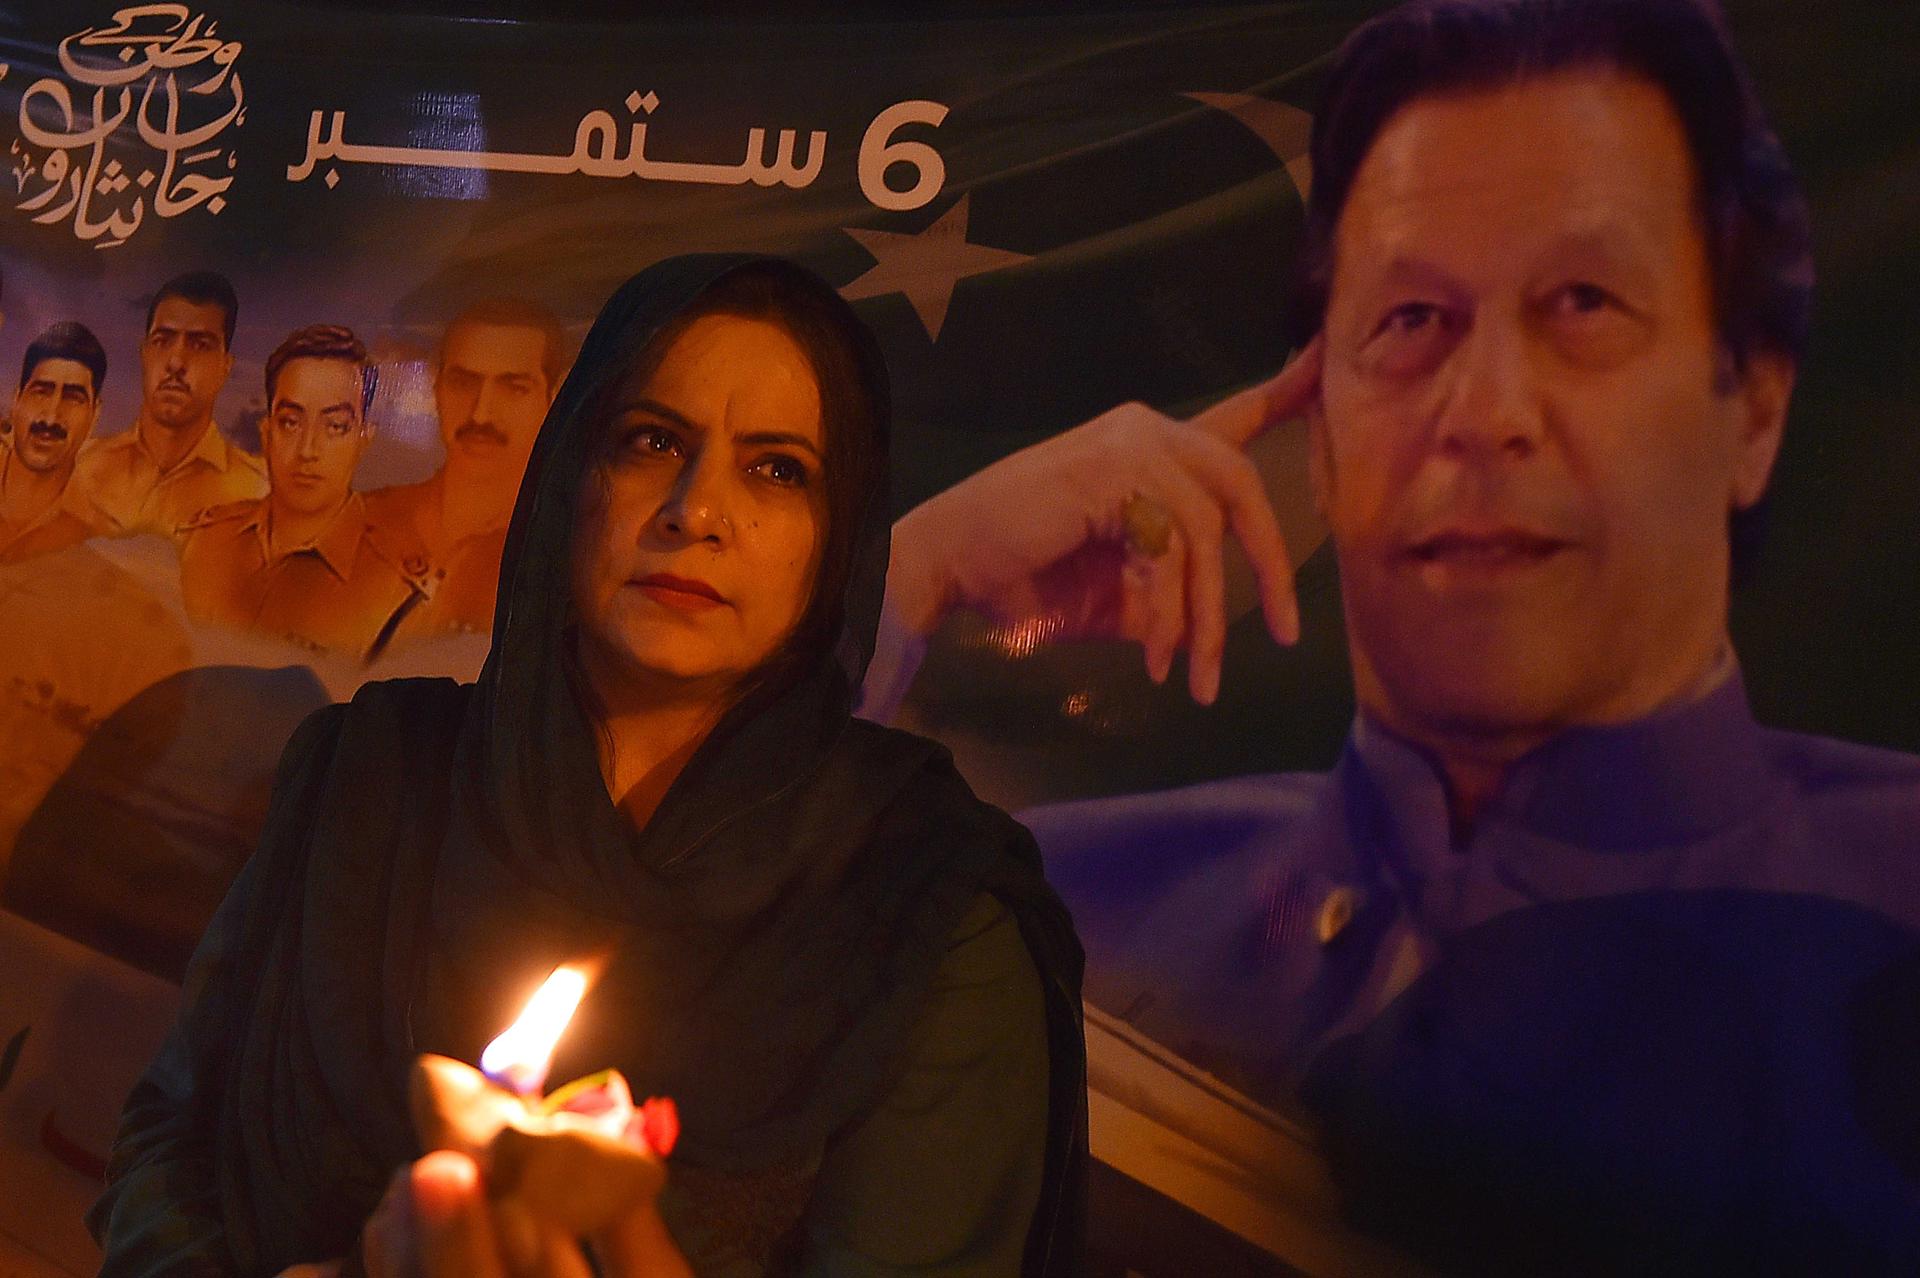 (FILE) Supporters of former Prime Minister Imran Khan's party Pakistan Tehrik-e-Insaf, light candles in Karachi, Pakistan. EFE/EPA/SHAHZAIB AKBER